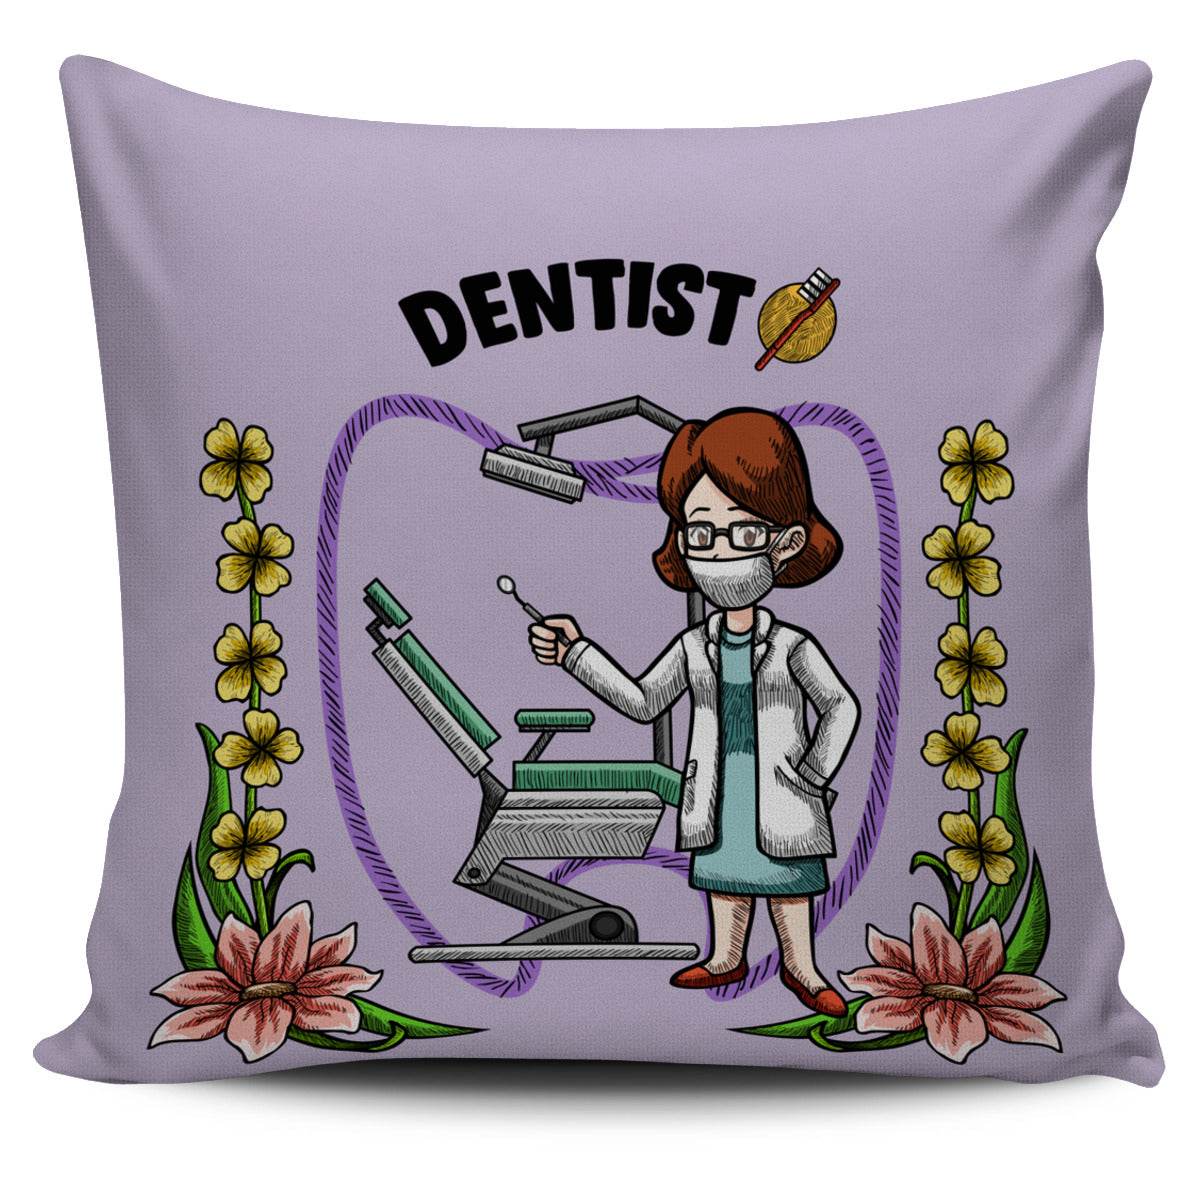 Dentist Pillow Cover